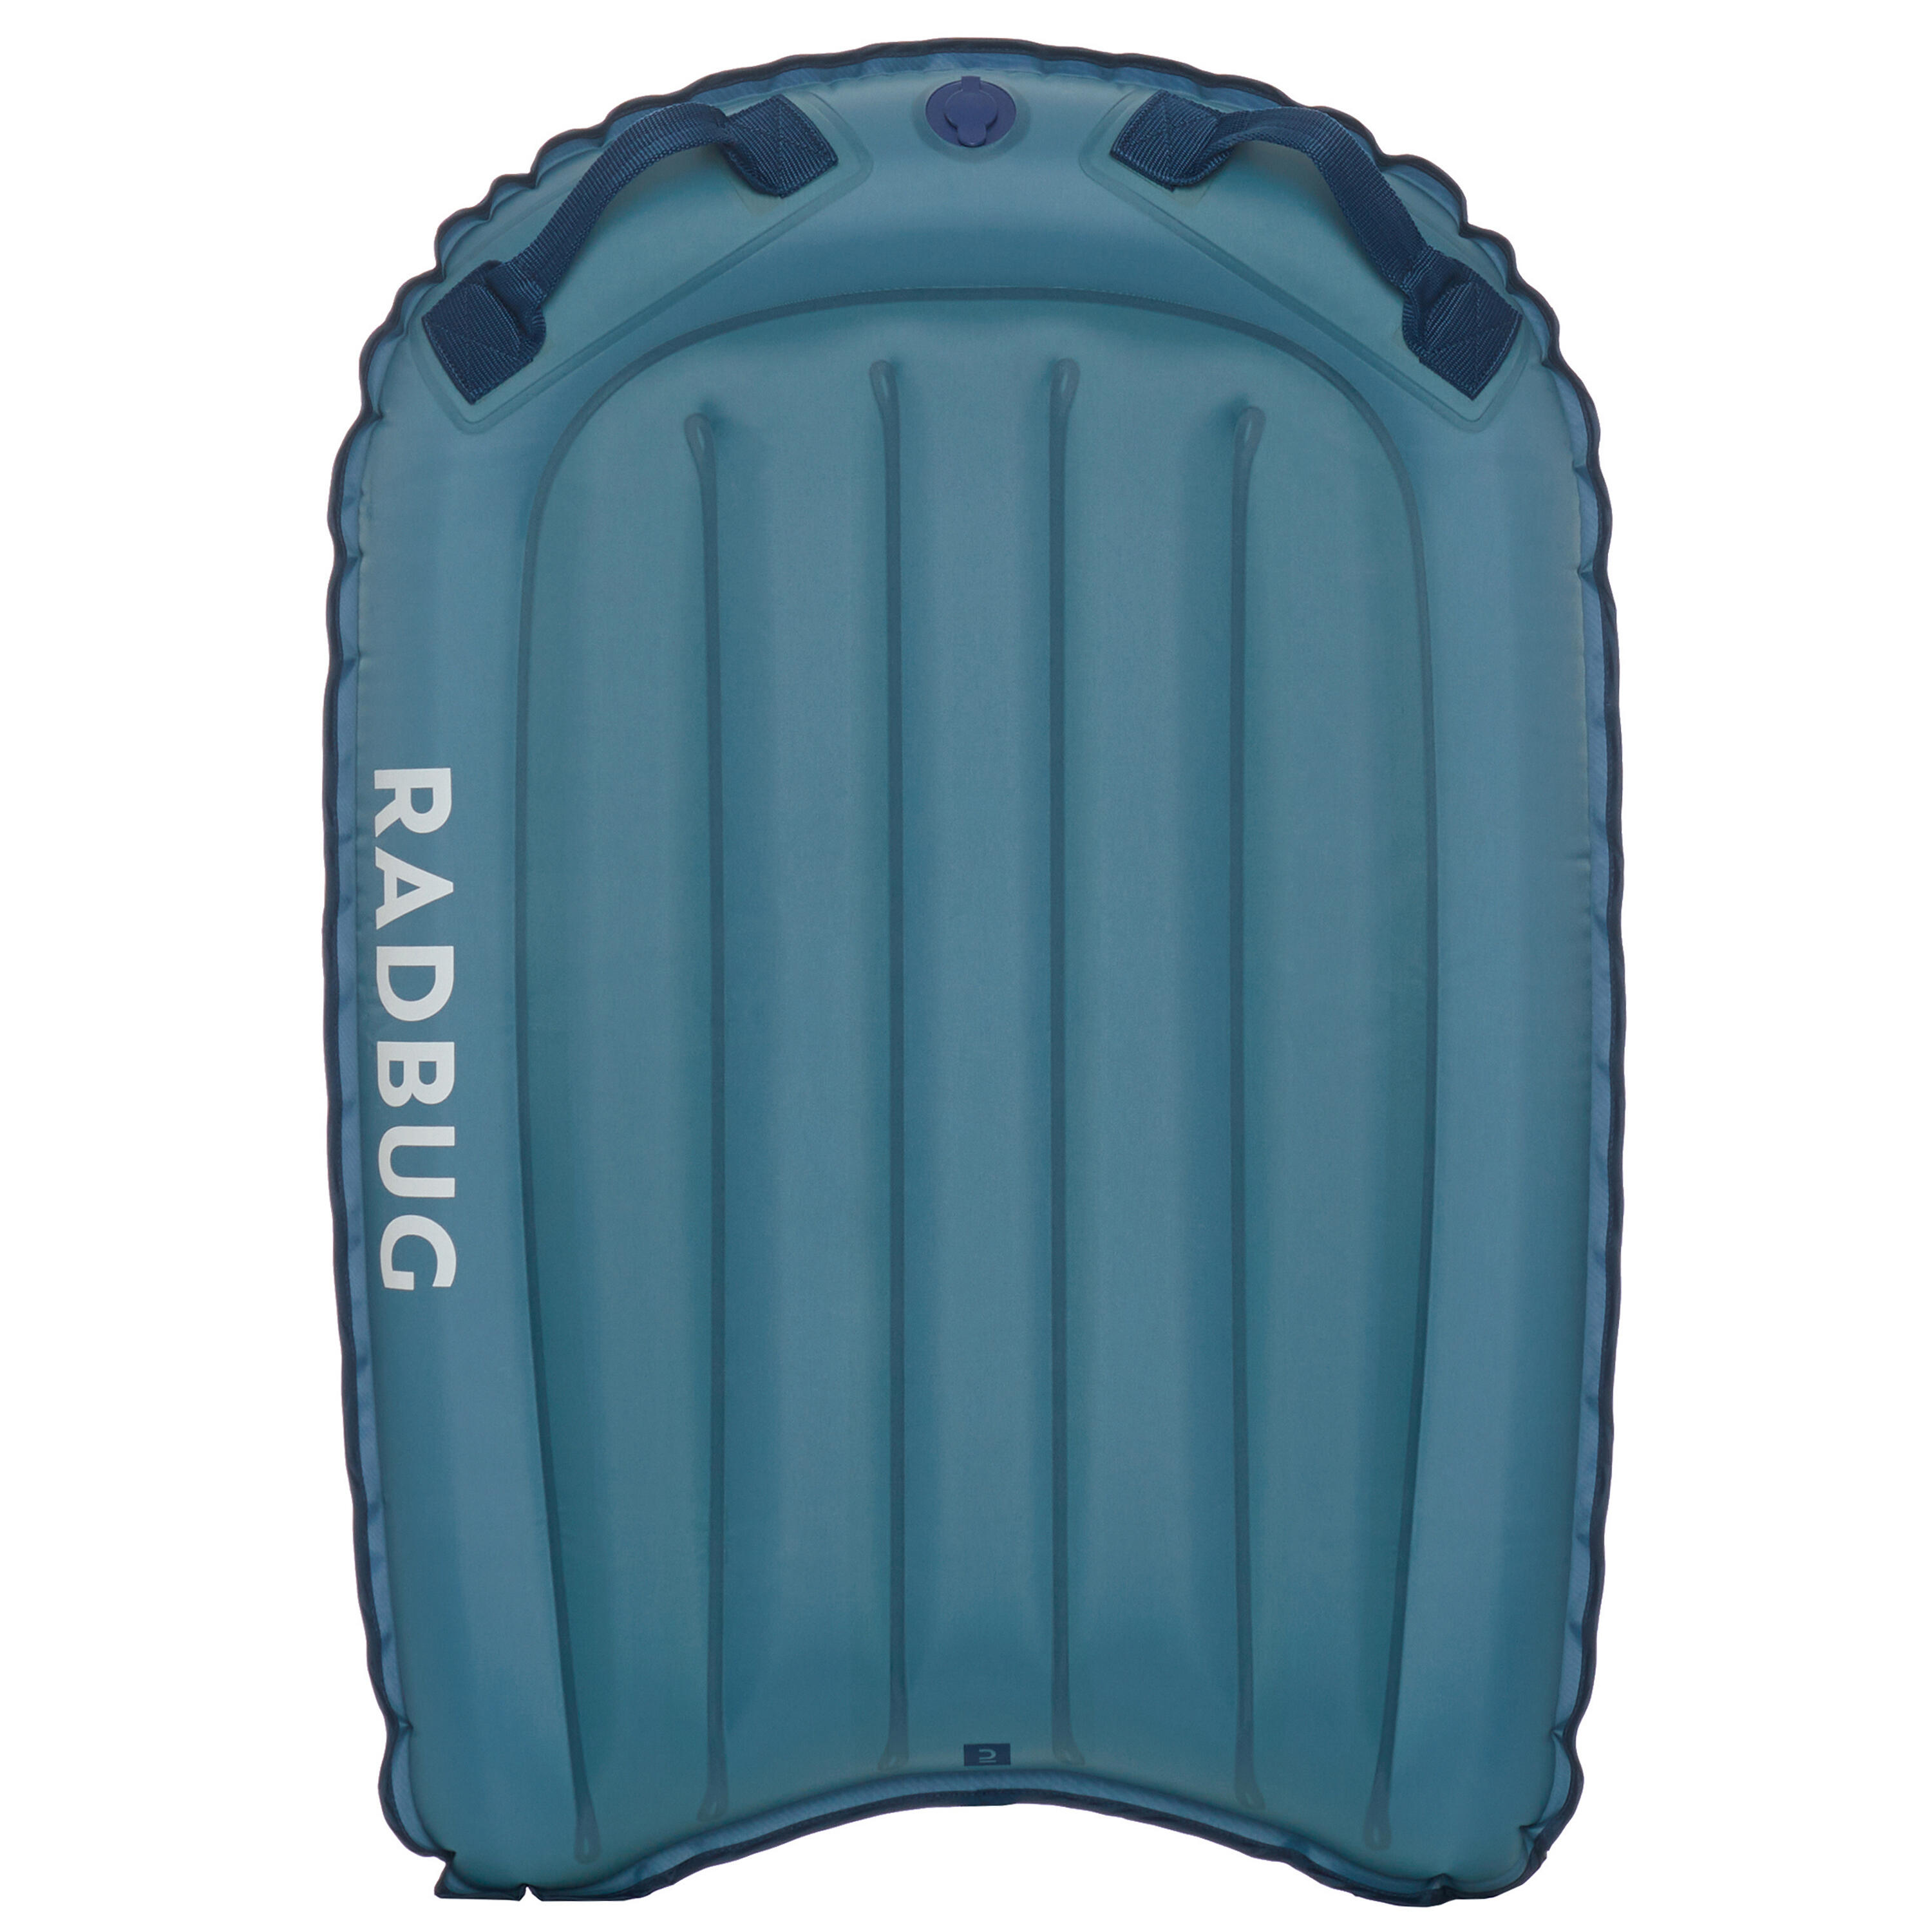 bodyboard nybörjare uppblåsbar – kompakt blå